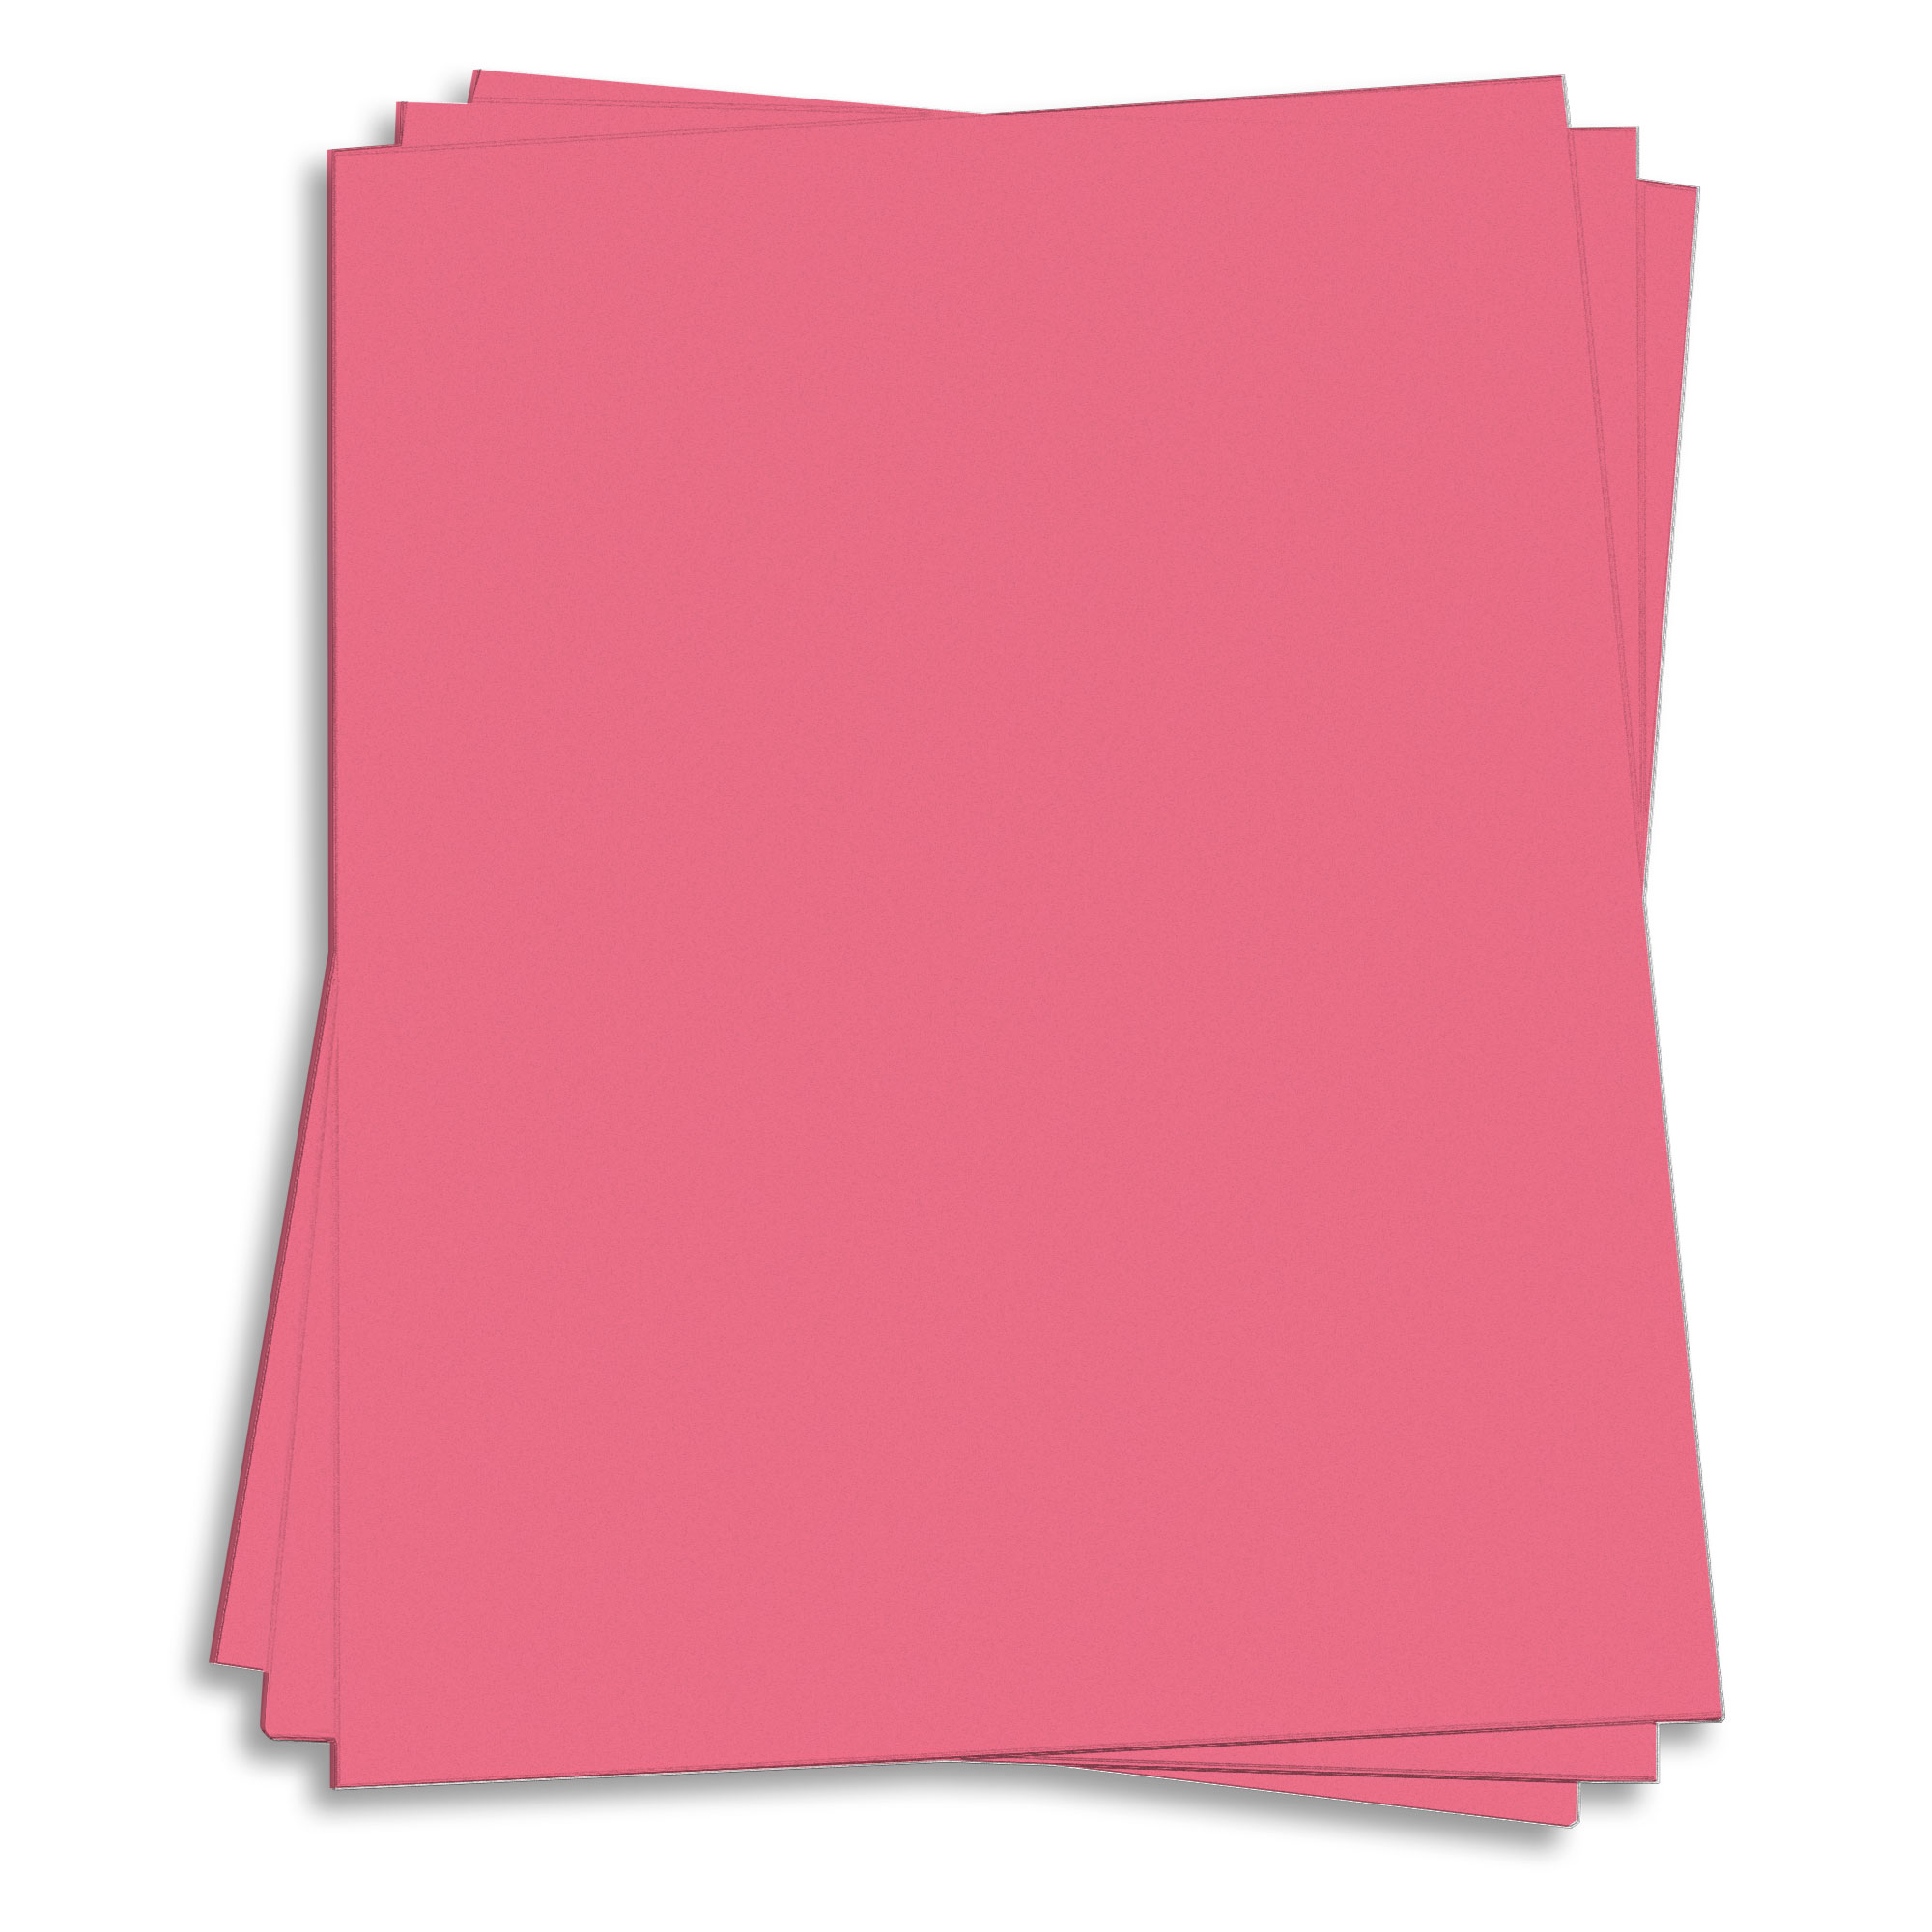 Pulsar Pink Card Stock - 8 1/2 x 11 65lb Cover